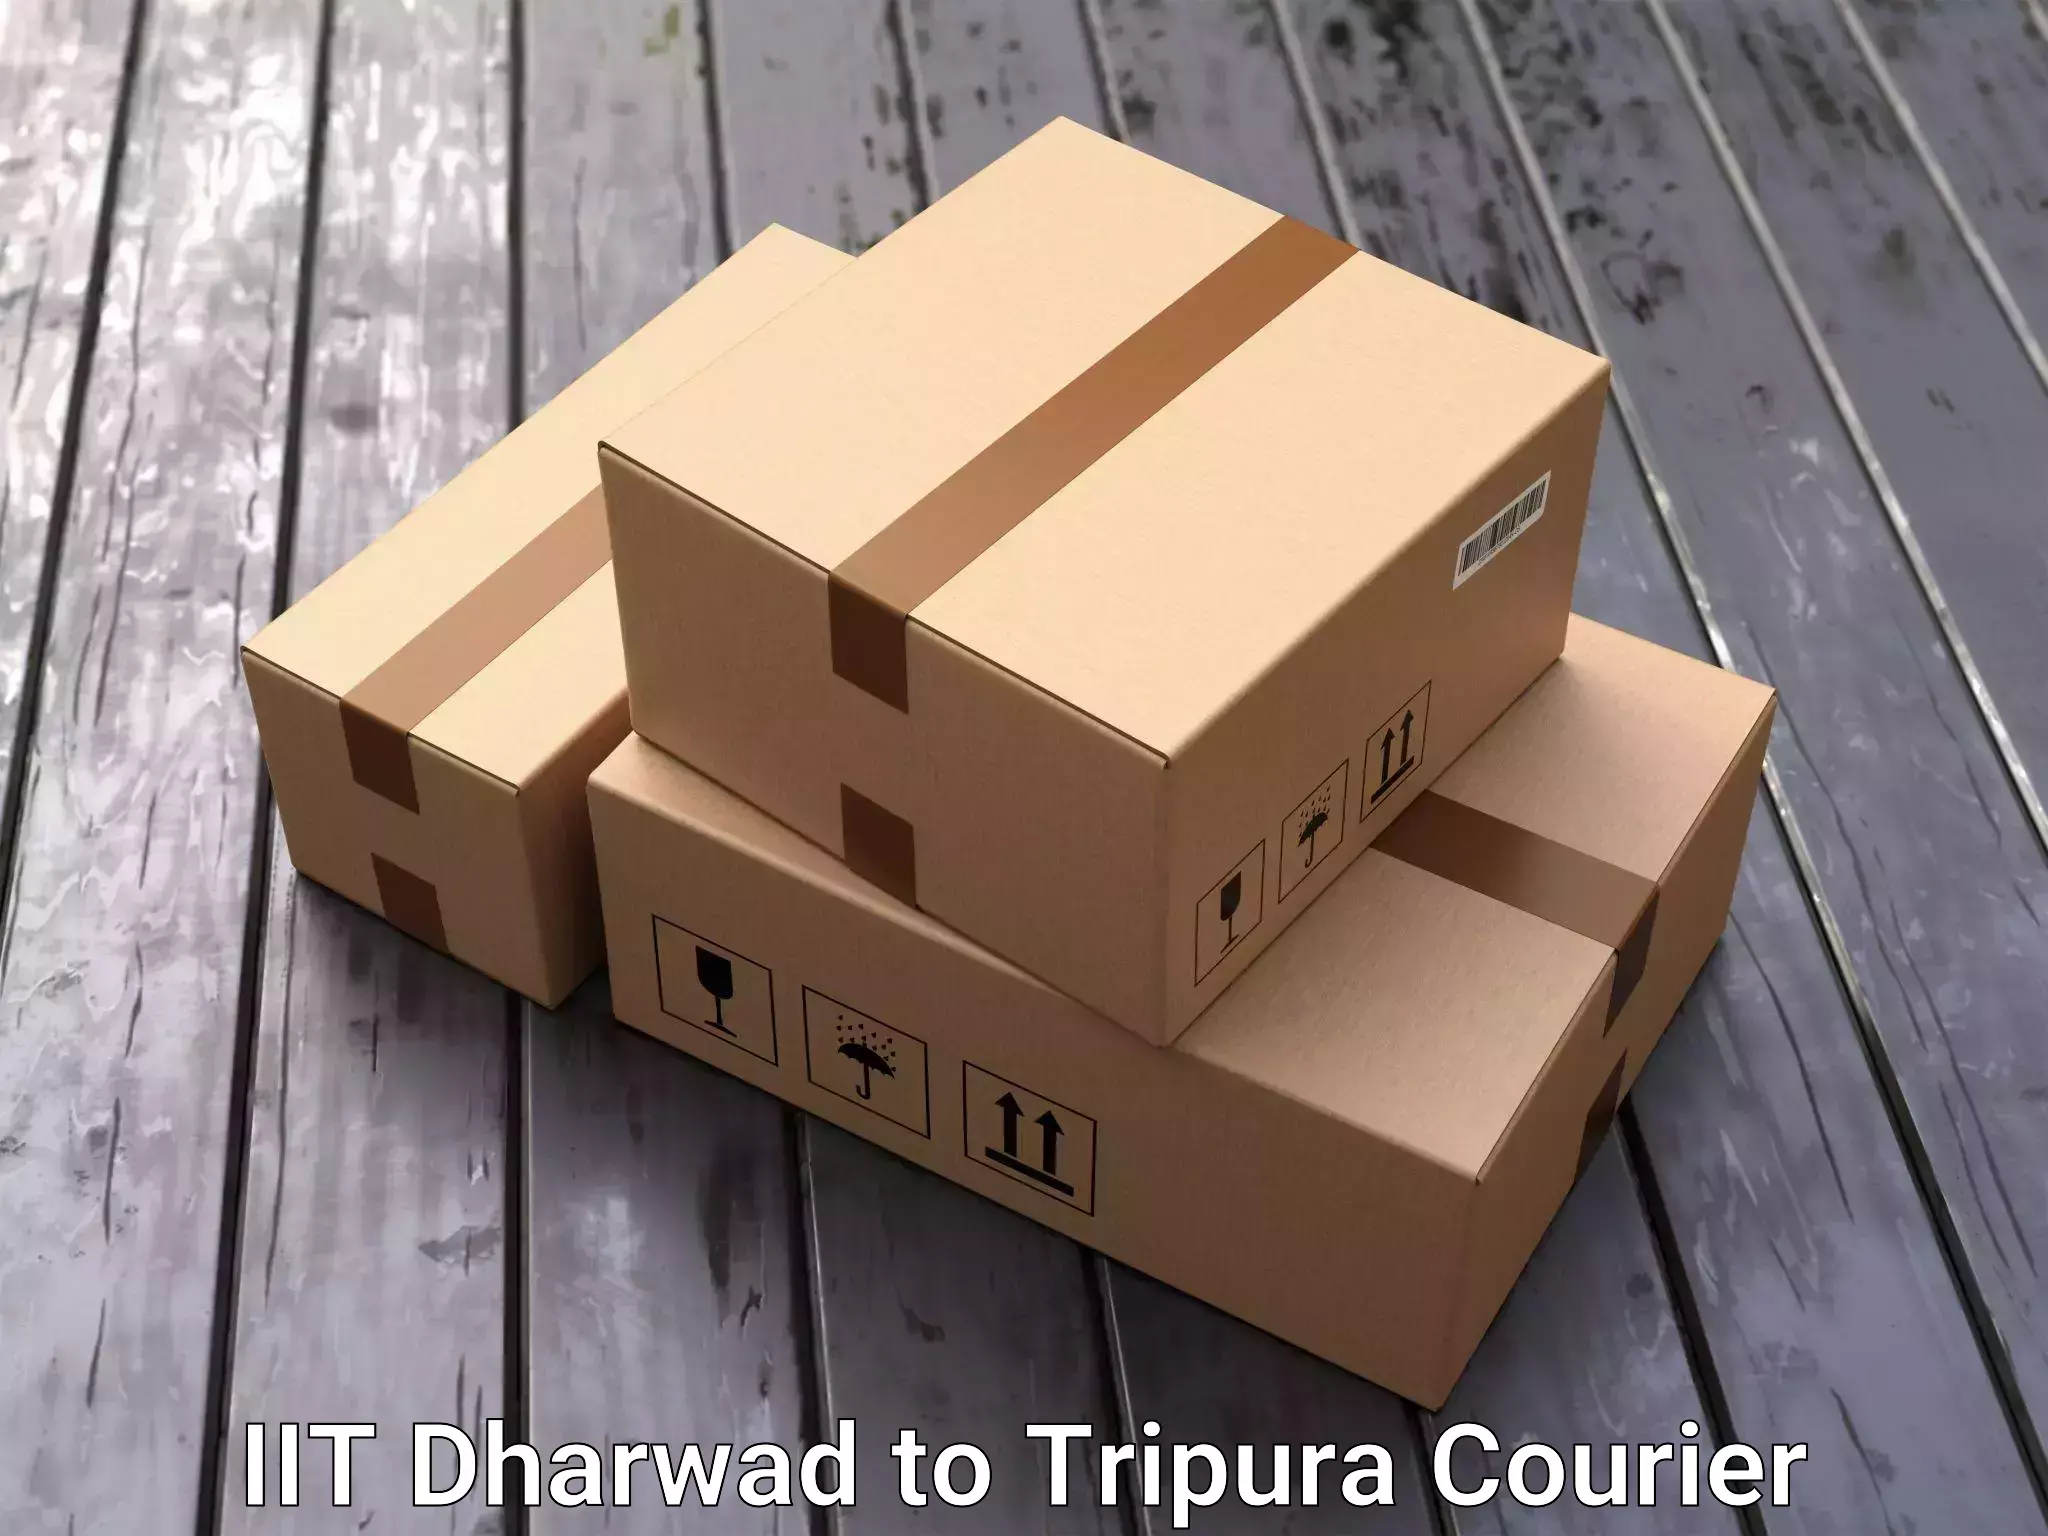 Professional moving company IIT Dharwad to North Tripura